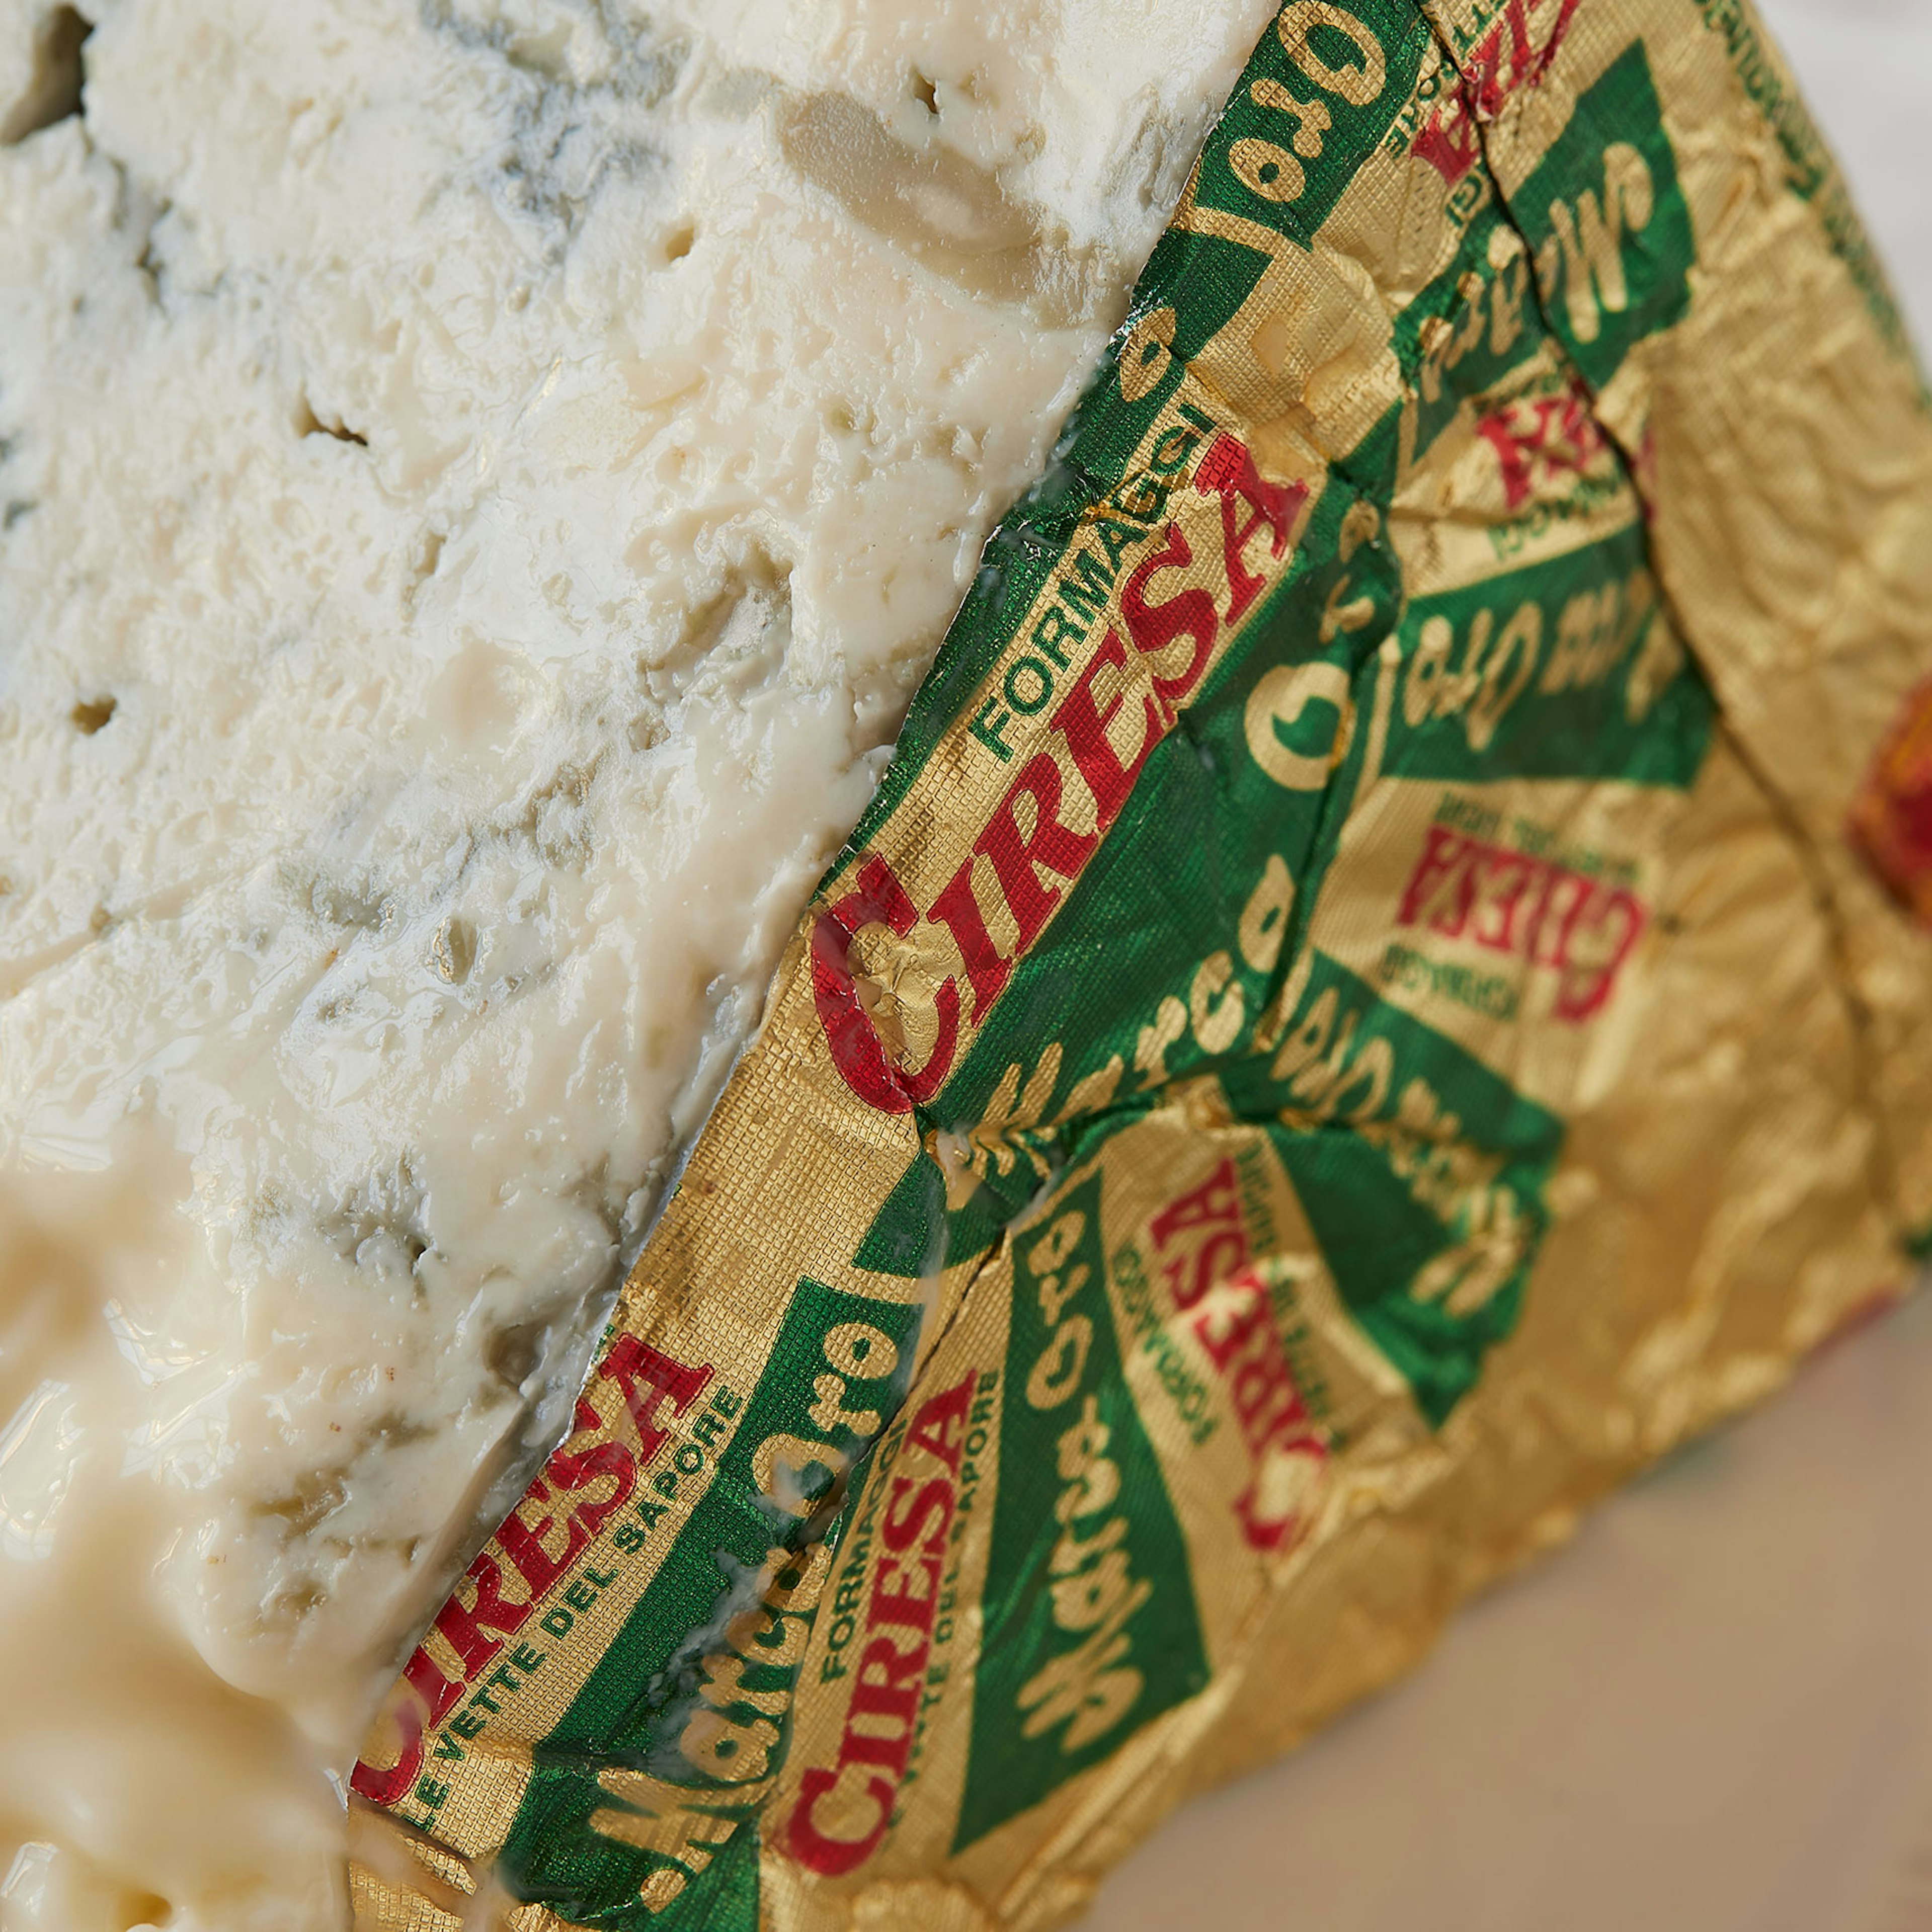 gorgonzola cremificato cheese